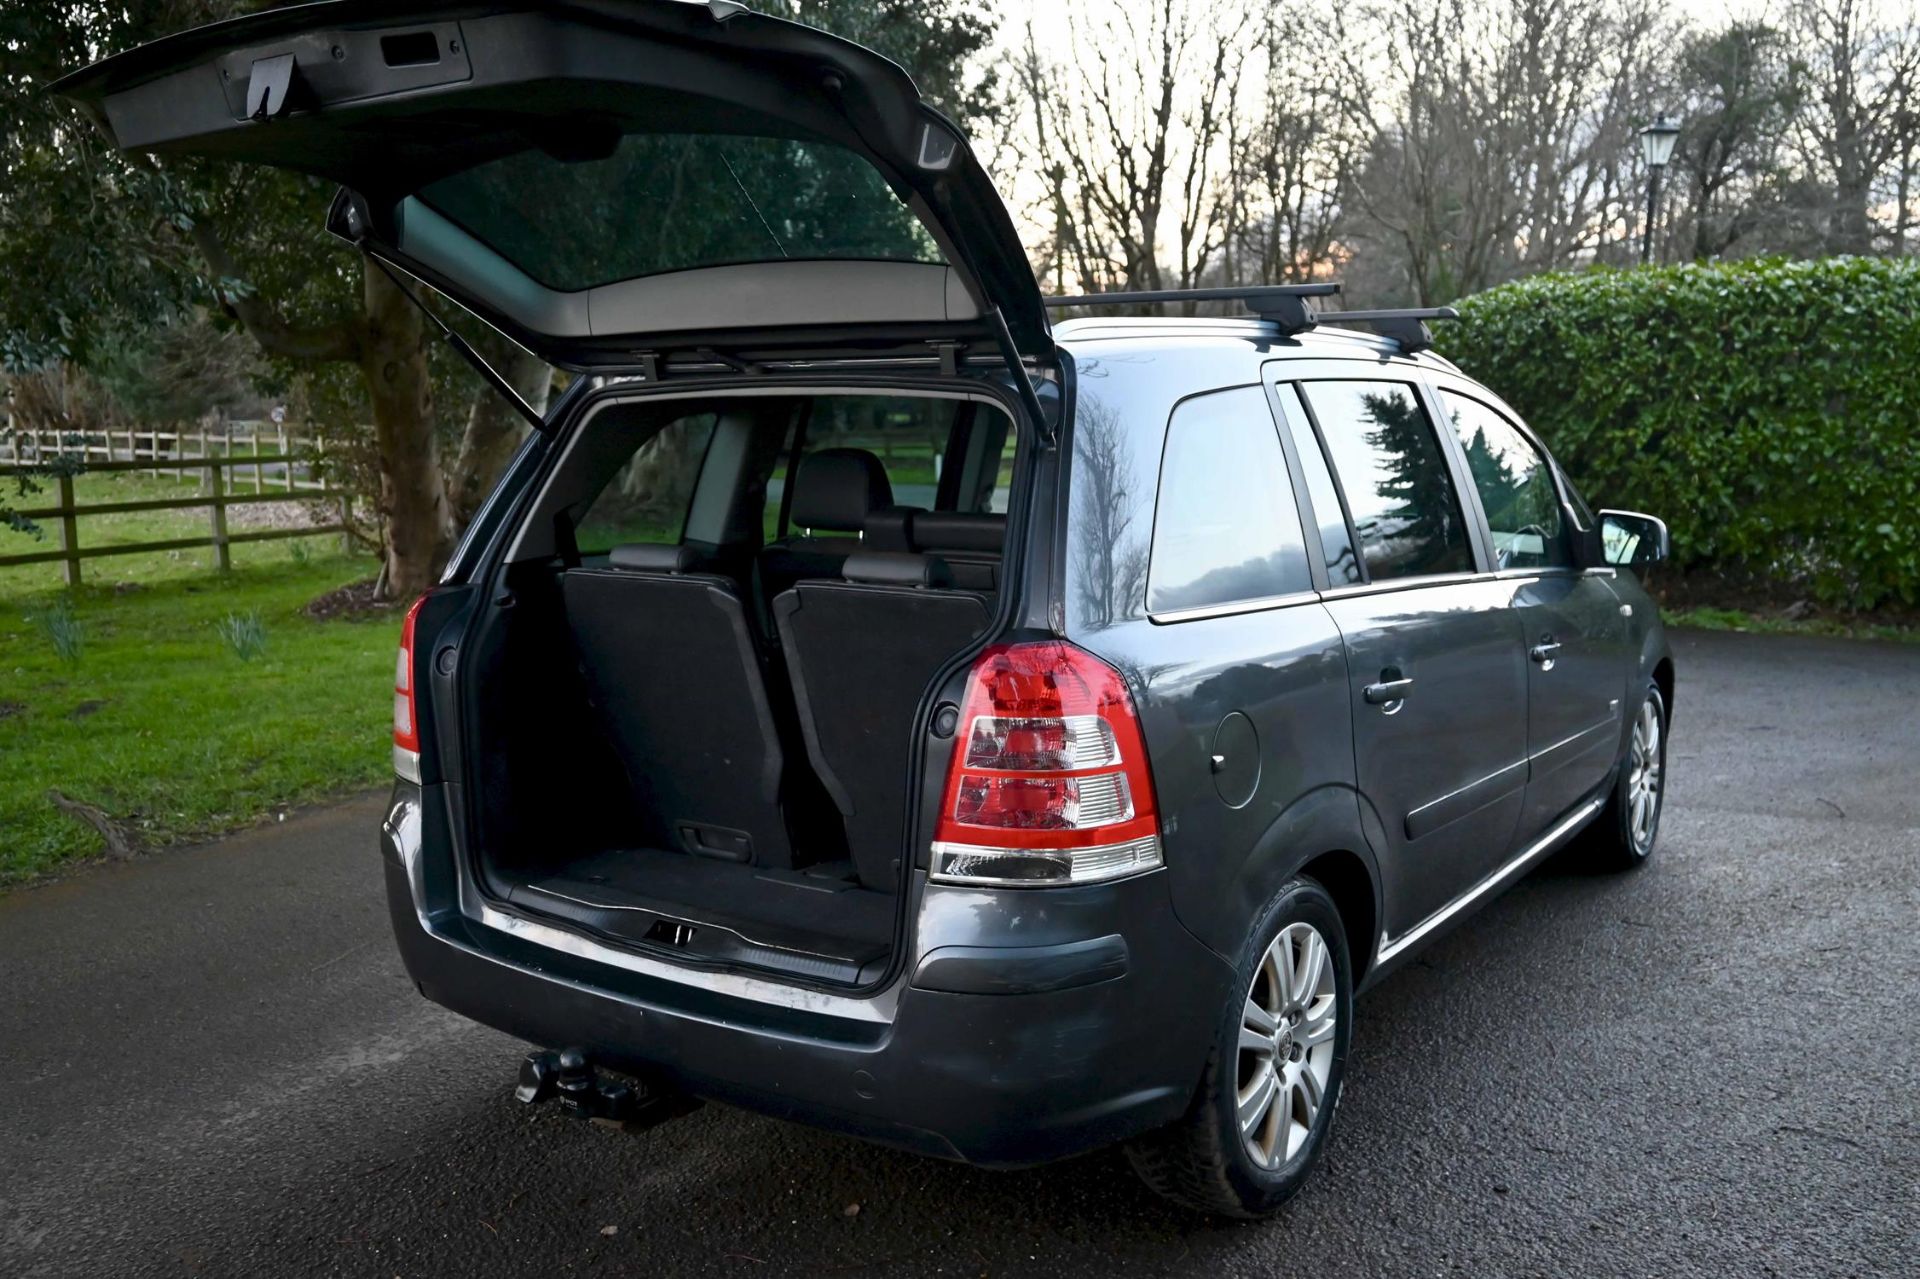 2011 Vauxhall Zafira 1.8 Design 5-door MPV. Metallic Grey, Petrol, 5-Speed Manual Full details - Image 9 of 11